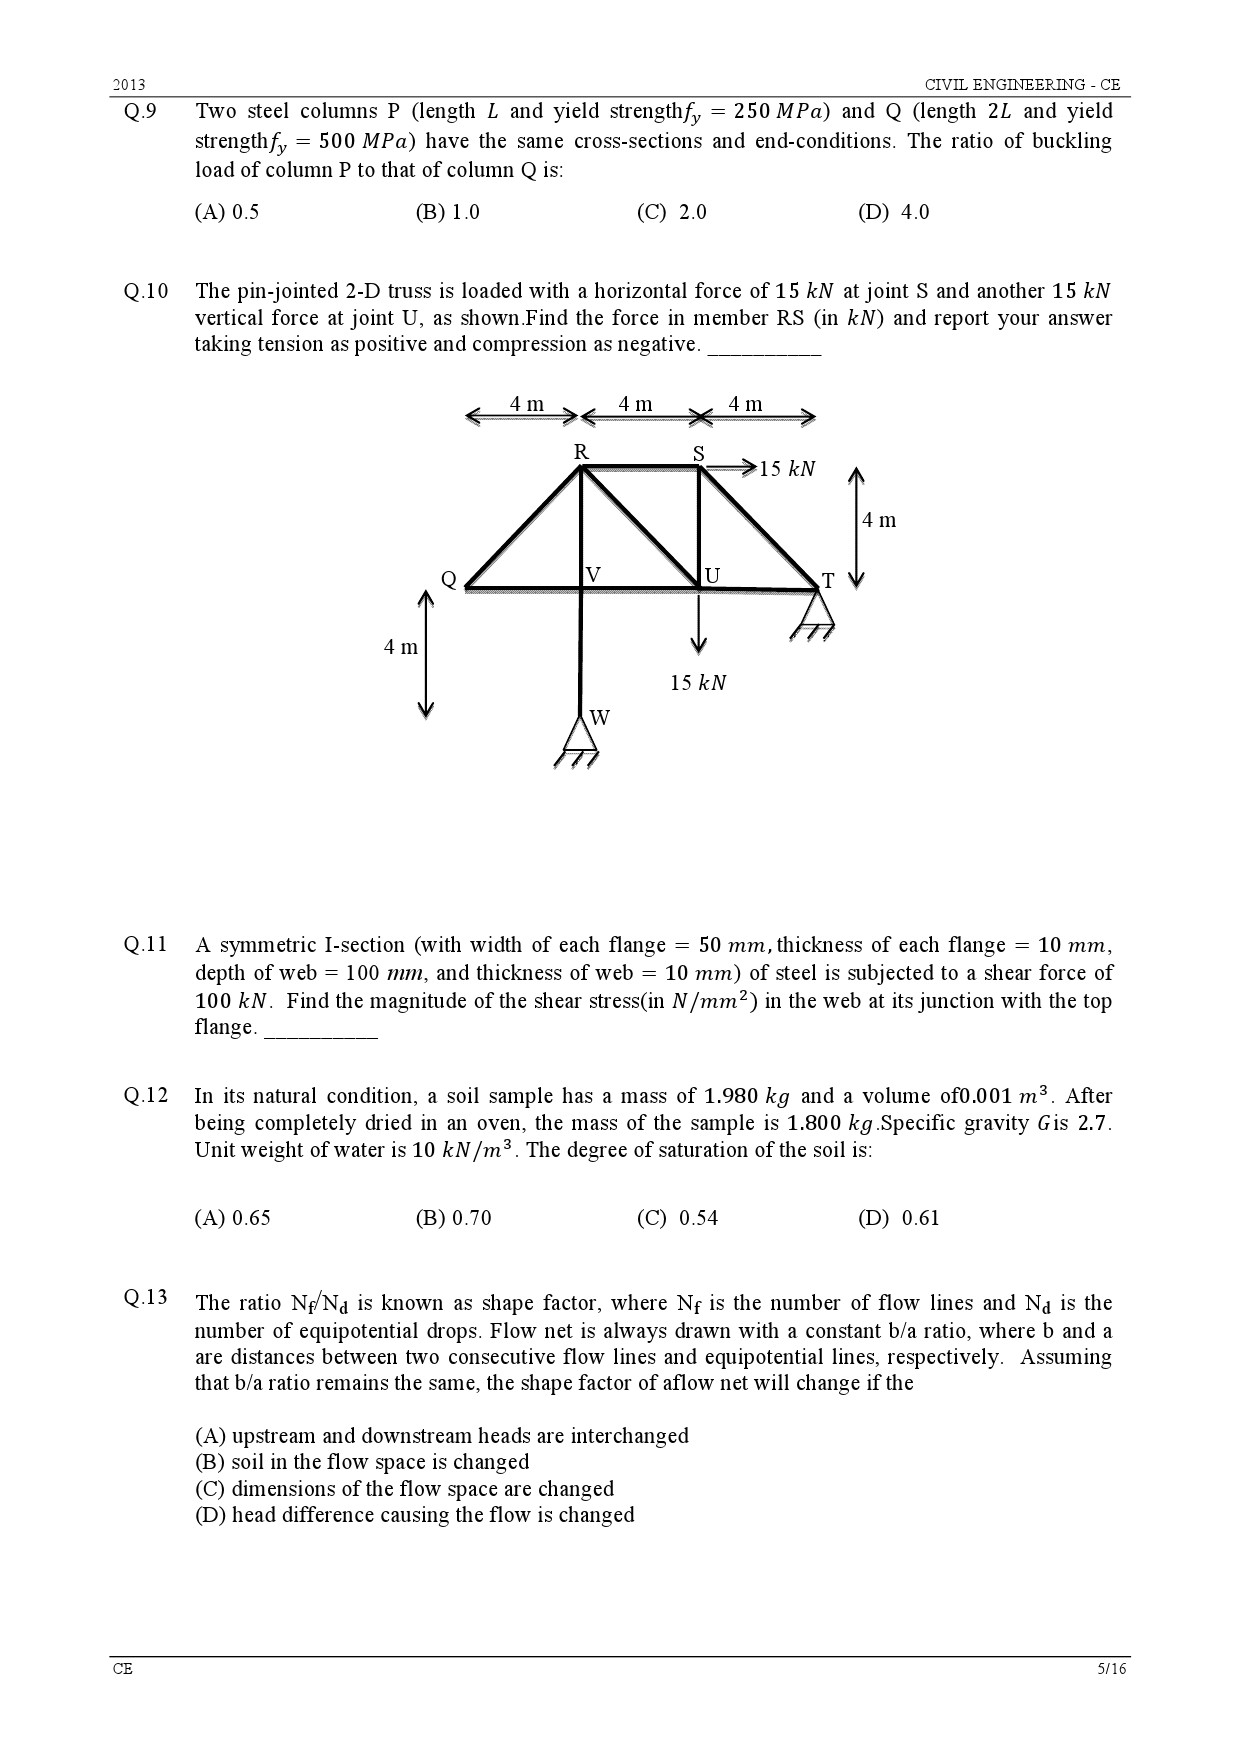 GATE Exam Question Paper 2013 Civil Engineering 5